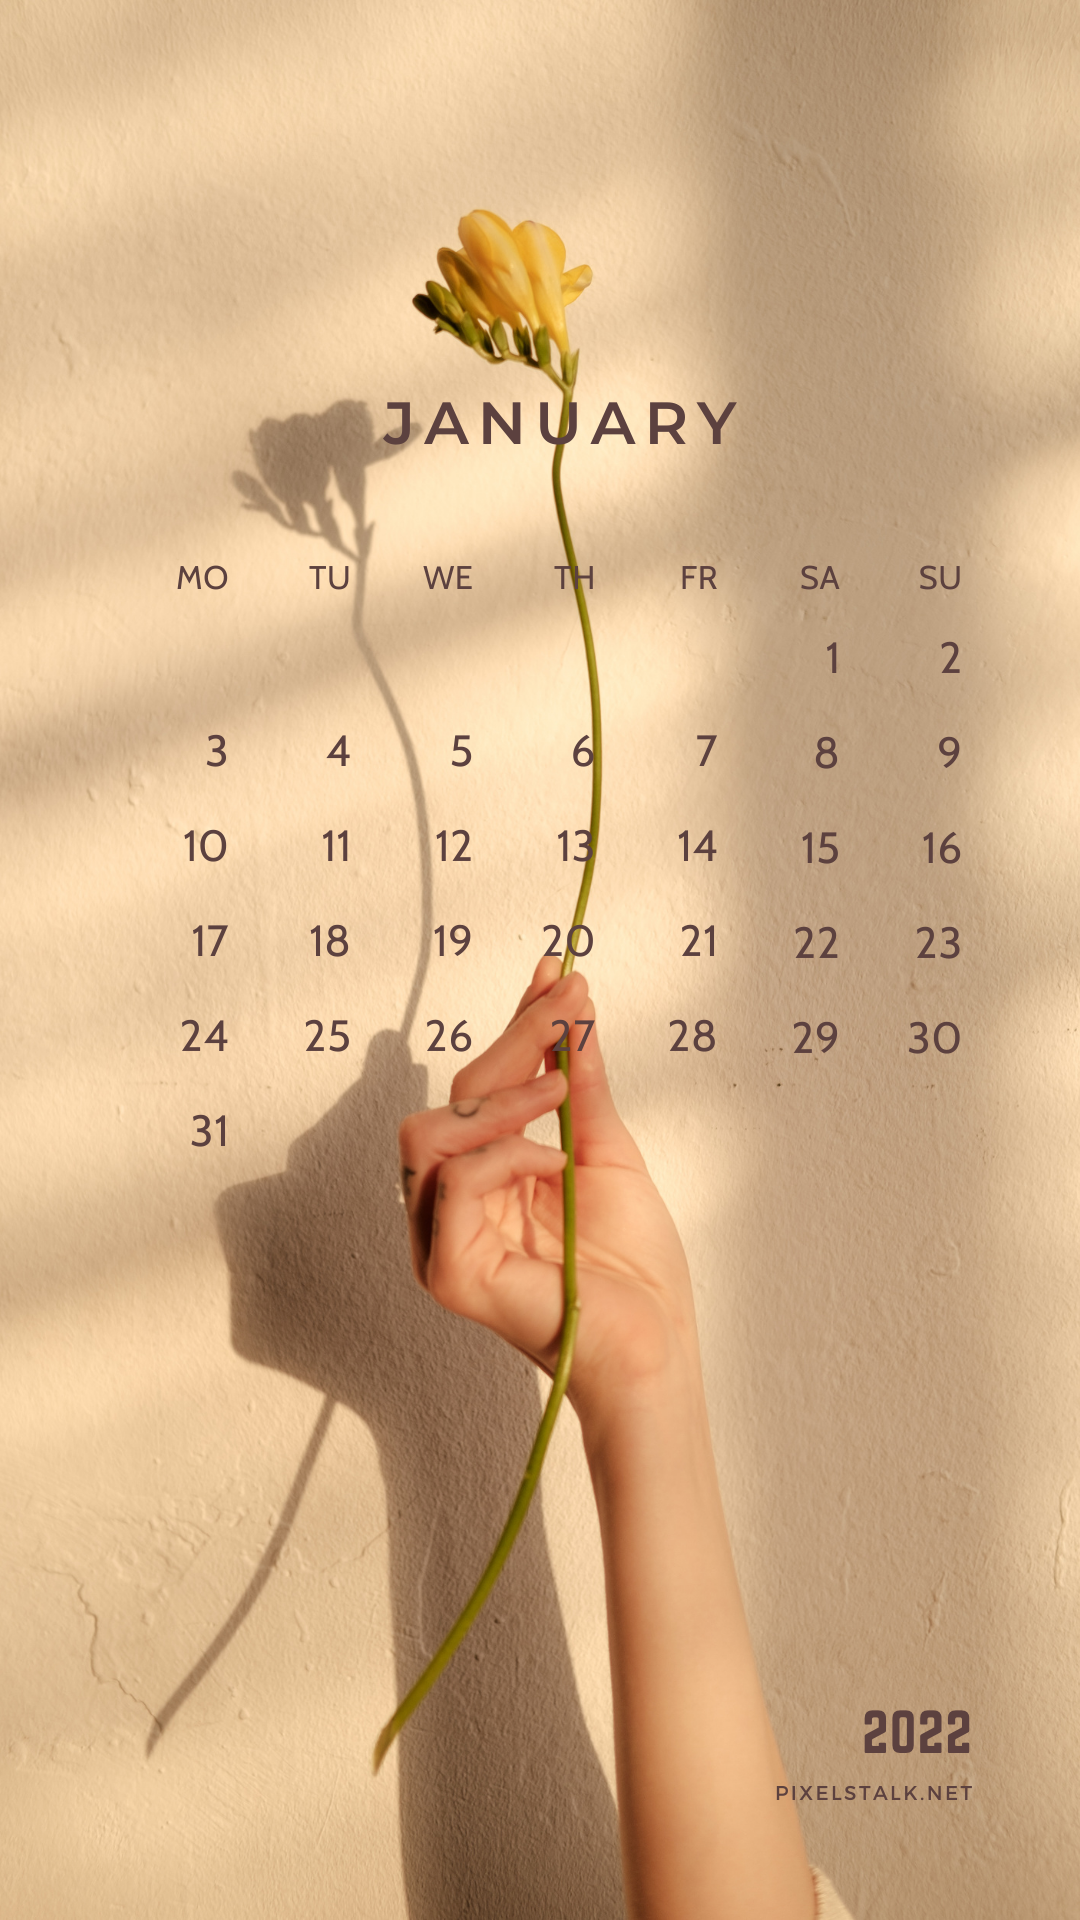 January Calendar iPhone Background